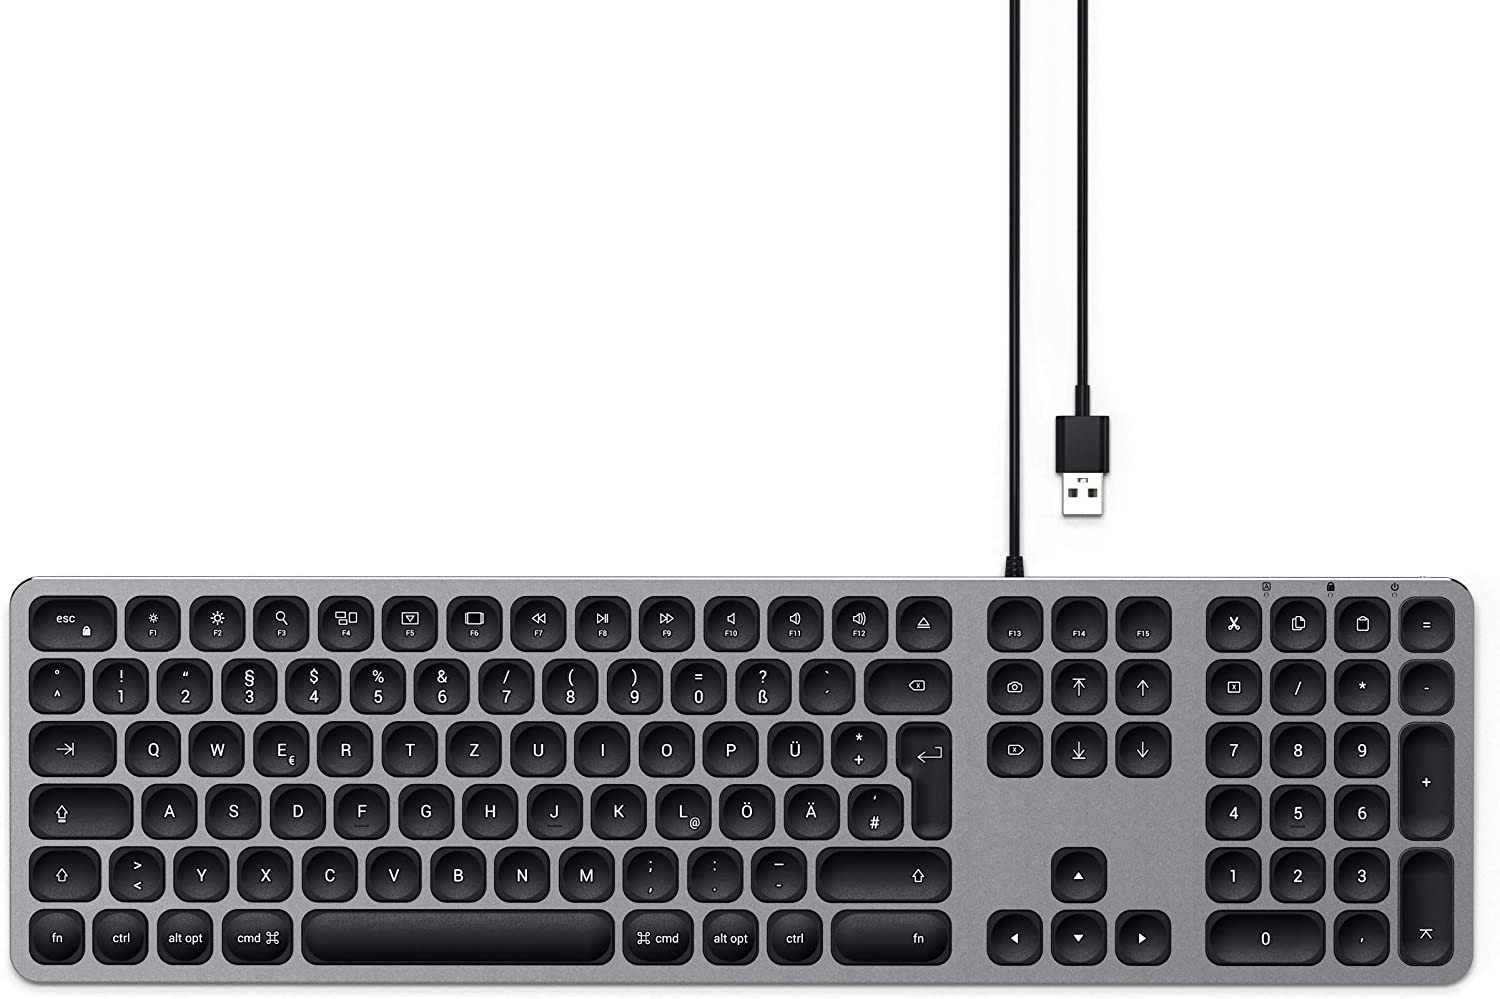 SATECHI USB-Keyboard Aluminium für MAC | Tastatur USB, Space Grau, QWERTZ deutsch